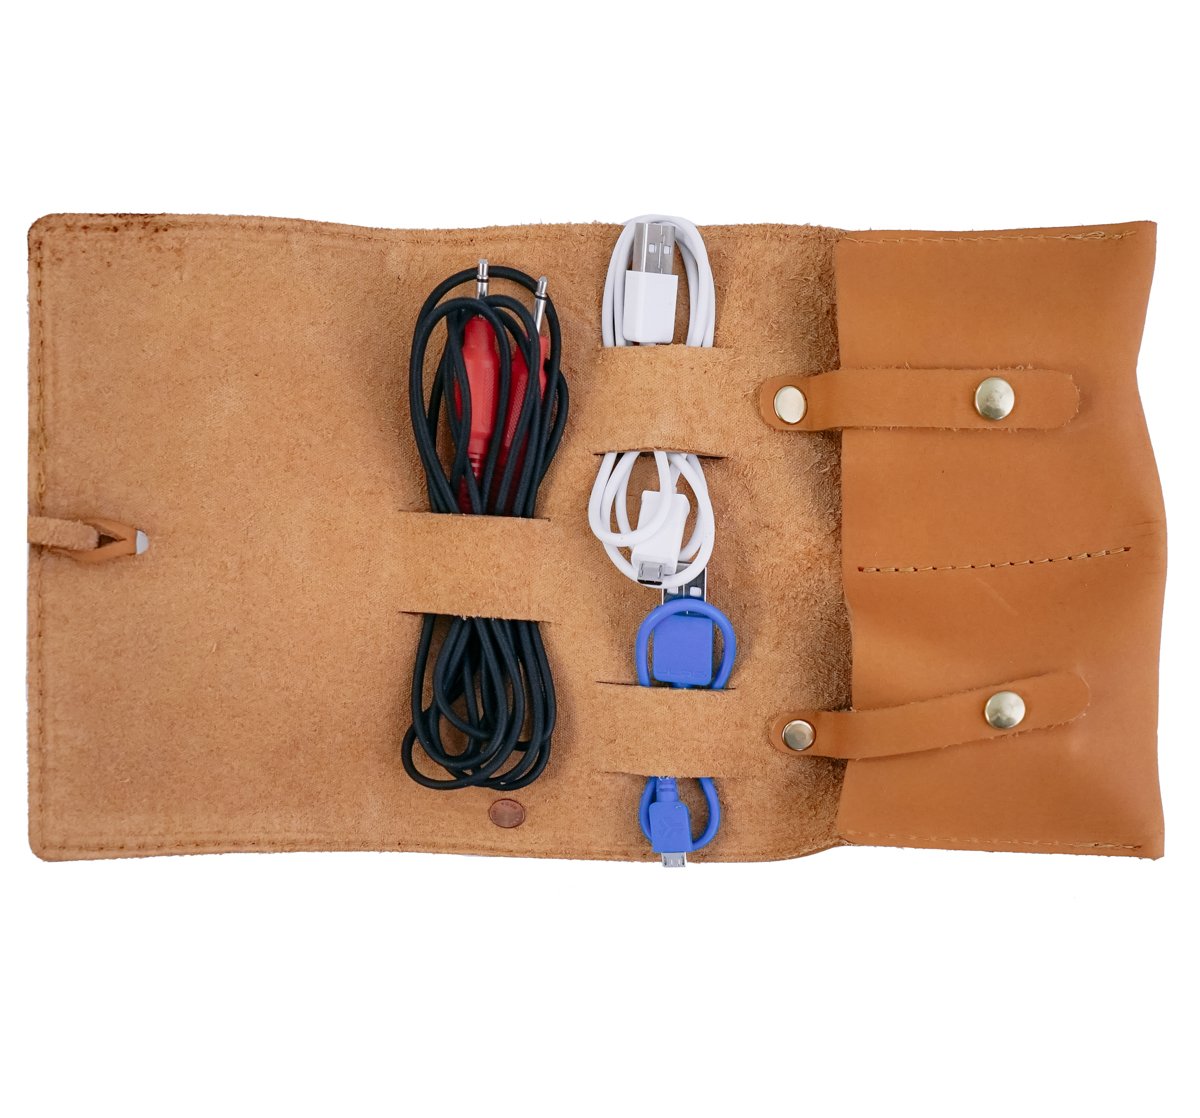 Rustico AC0752-0002 Sidekick Leather Travel Cord Organizer in Saddle